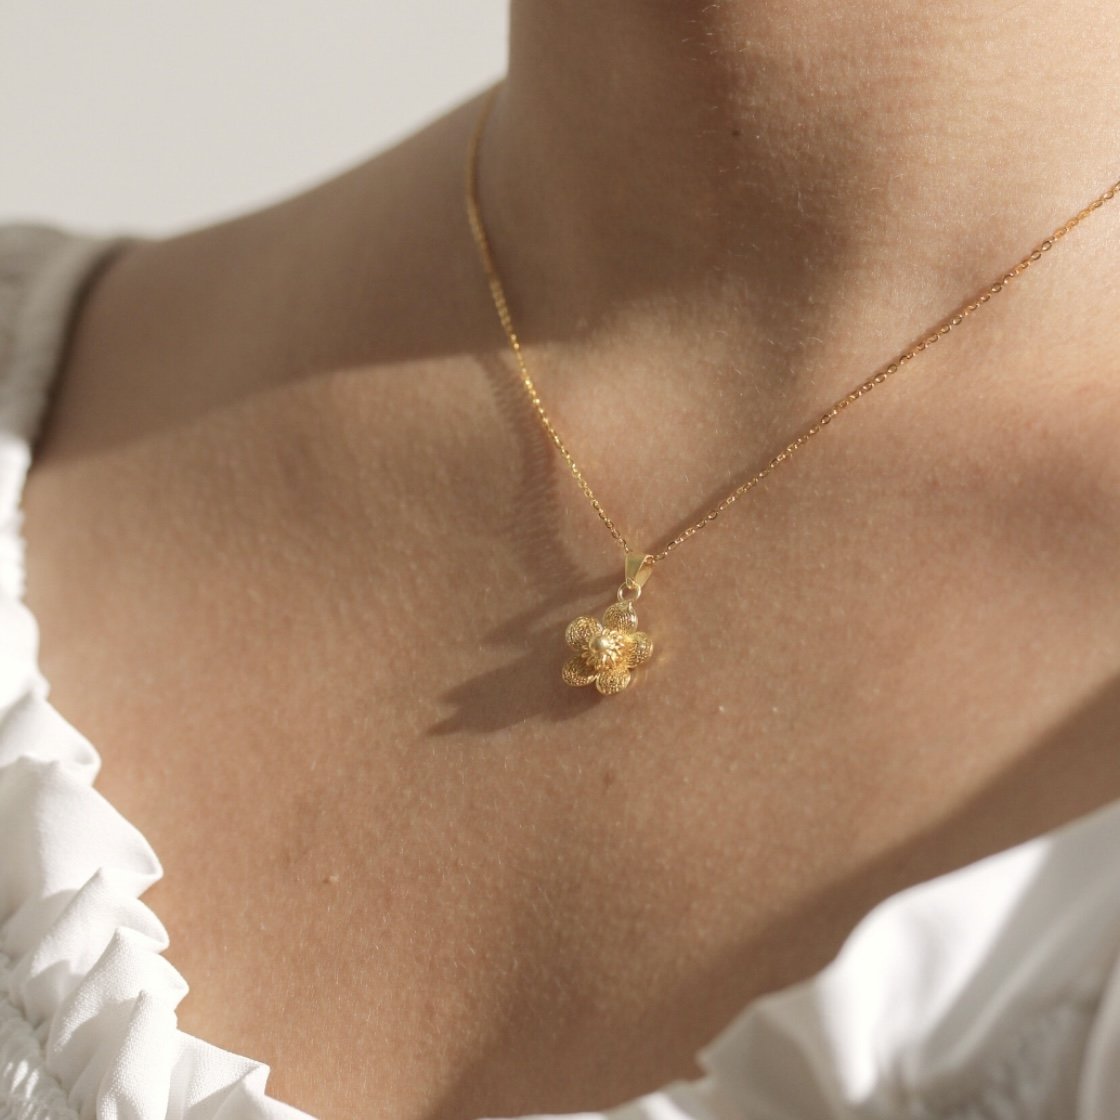  Sampaguita Minimalist Pendant Necklace | Photo by  @amami.ph  